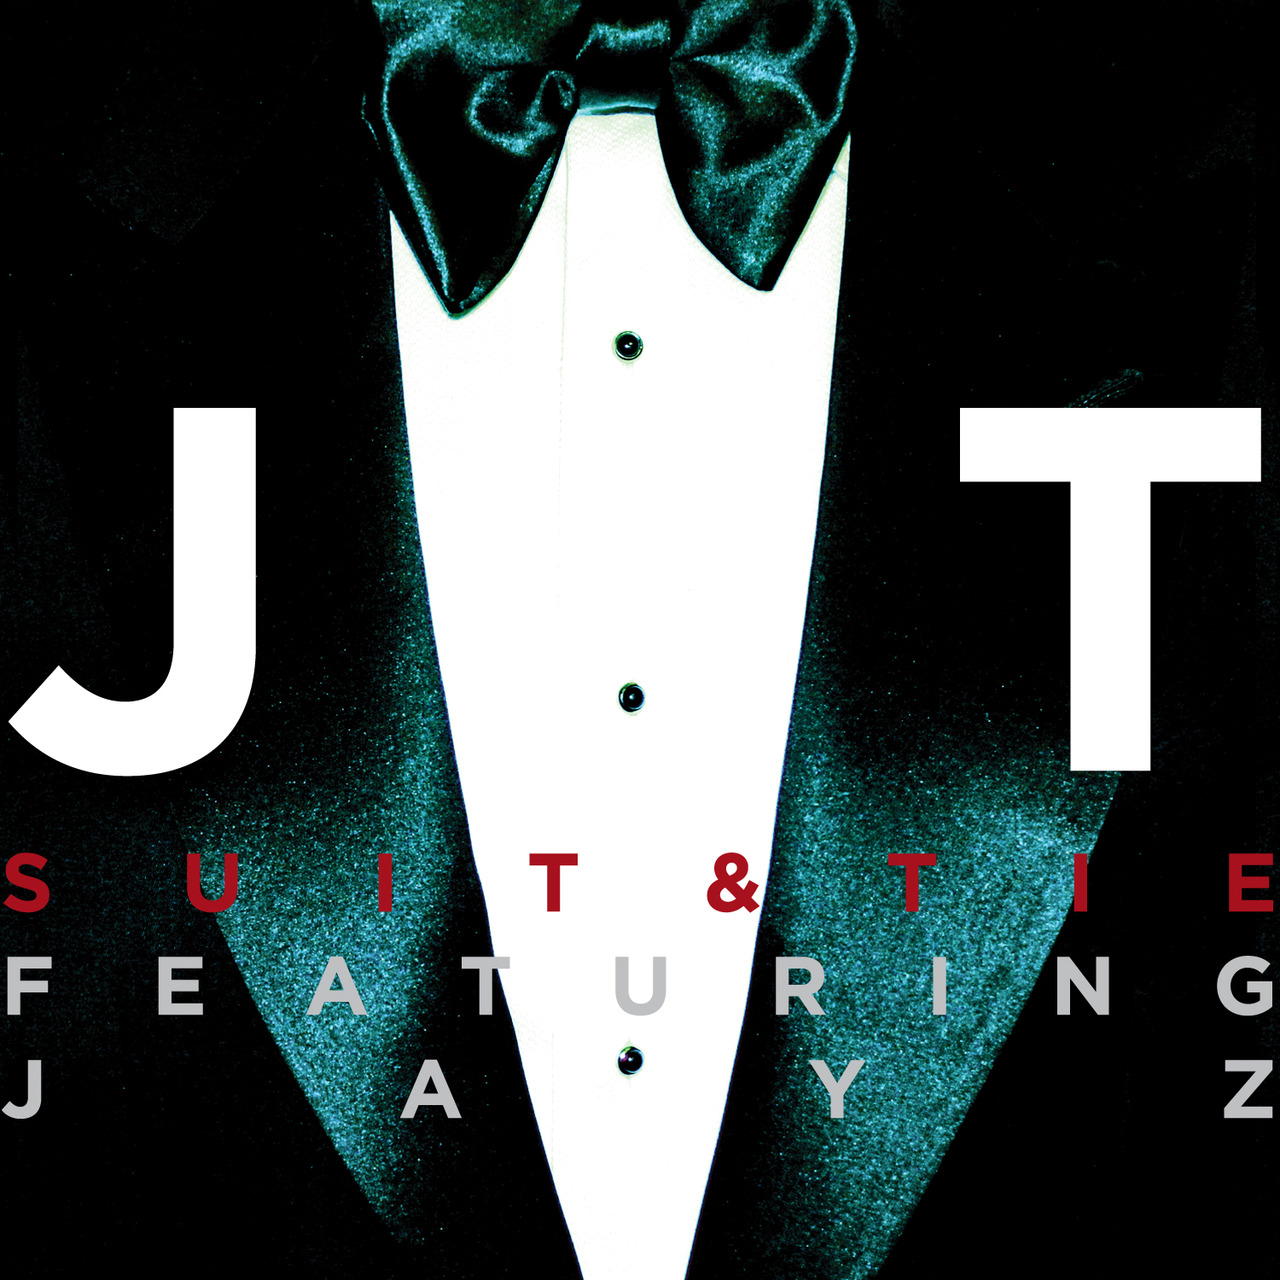 http://3.bp.blogspot.com/-gFwcKlXm_Iw/UPYaliehseI/AAAAAAAAD5Q/5fcmDC7wbns/s1600/Justin+Timberlake+Jay-Z+Suit+%2526+Tie.jpg